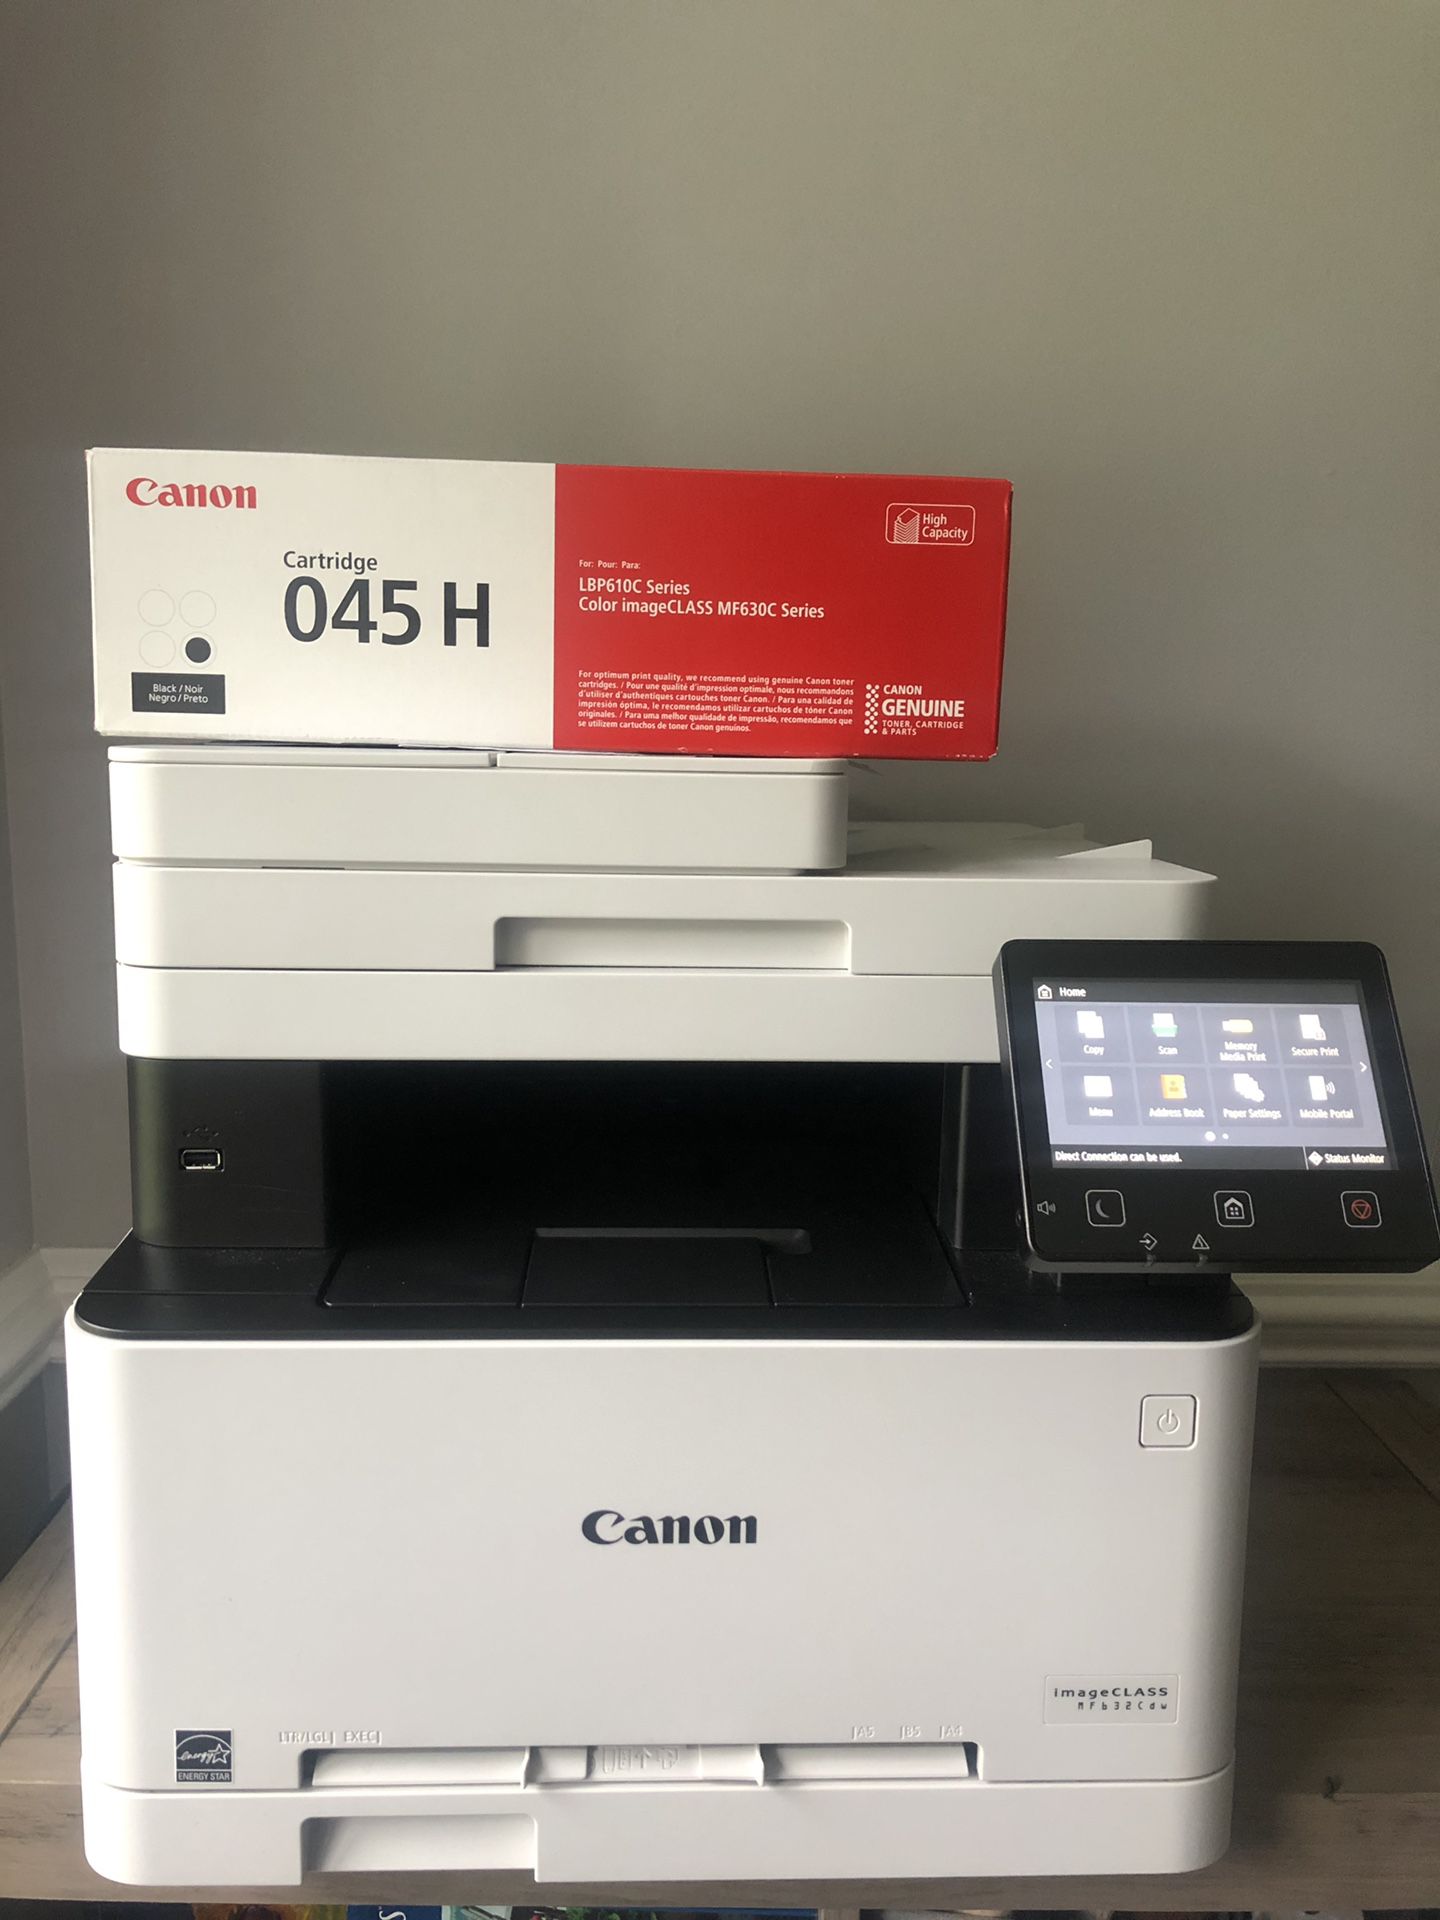 Canon Image Class Color Laser Printer